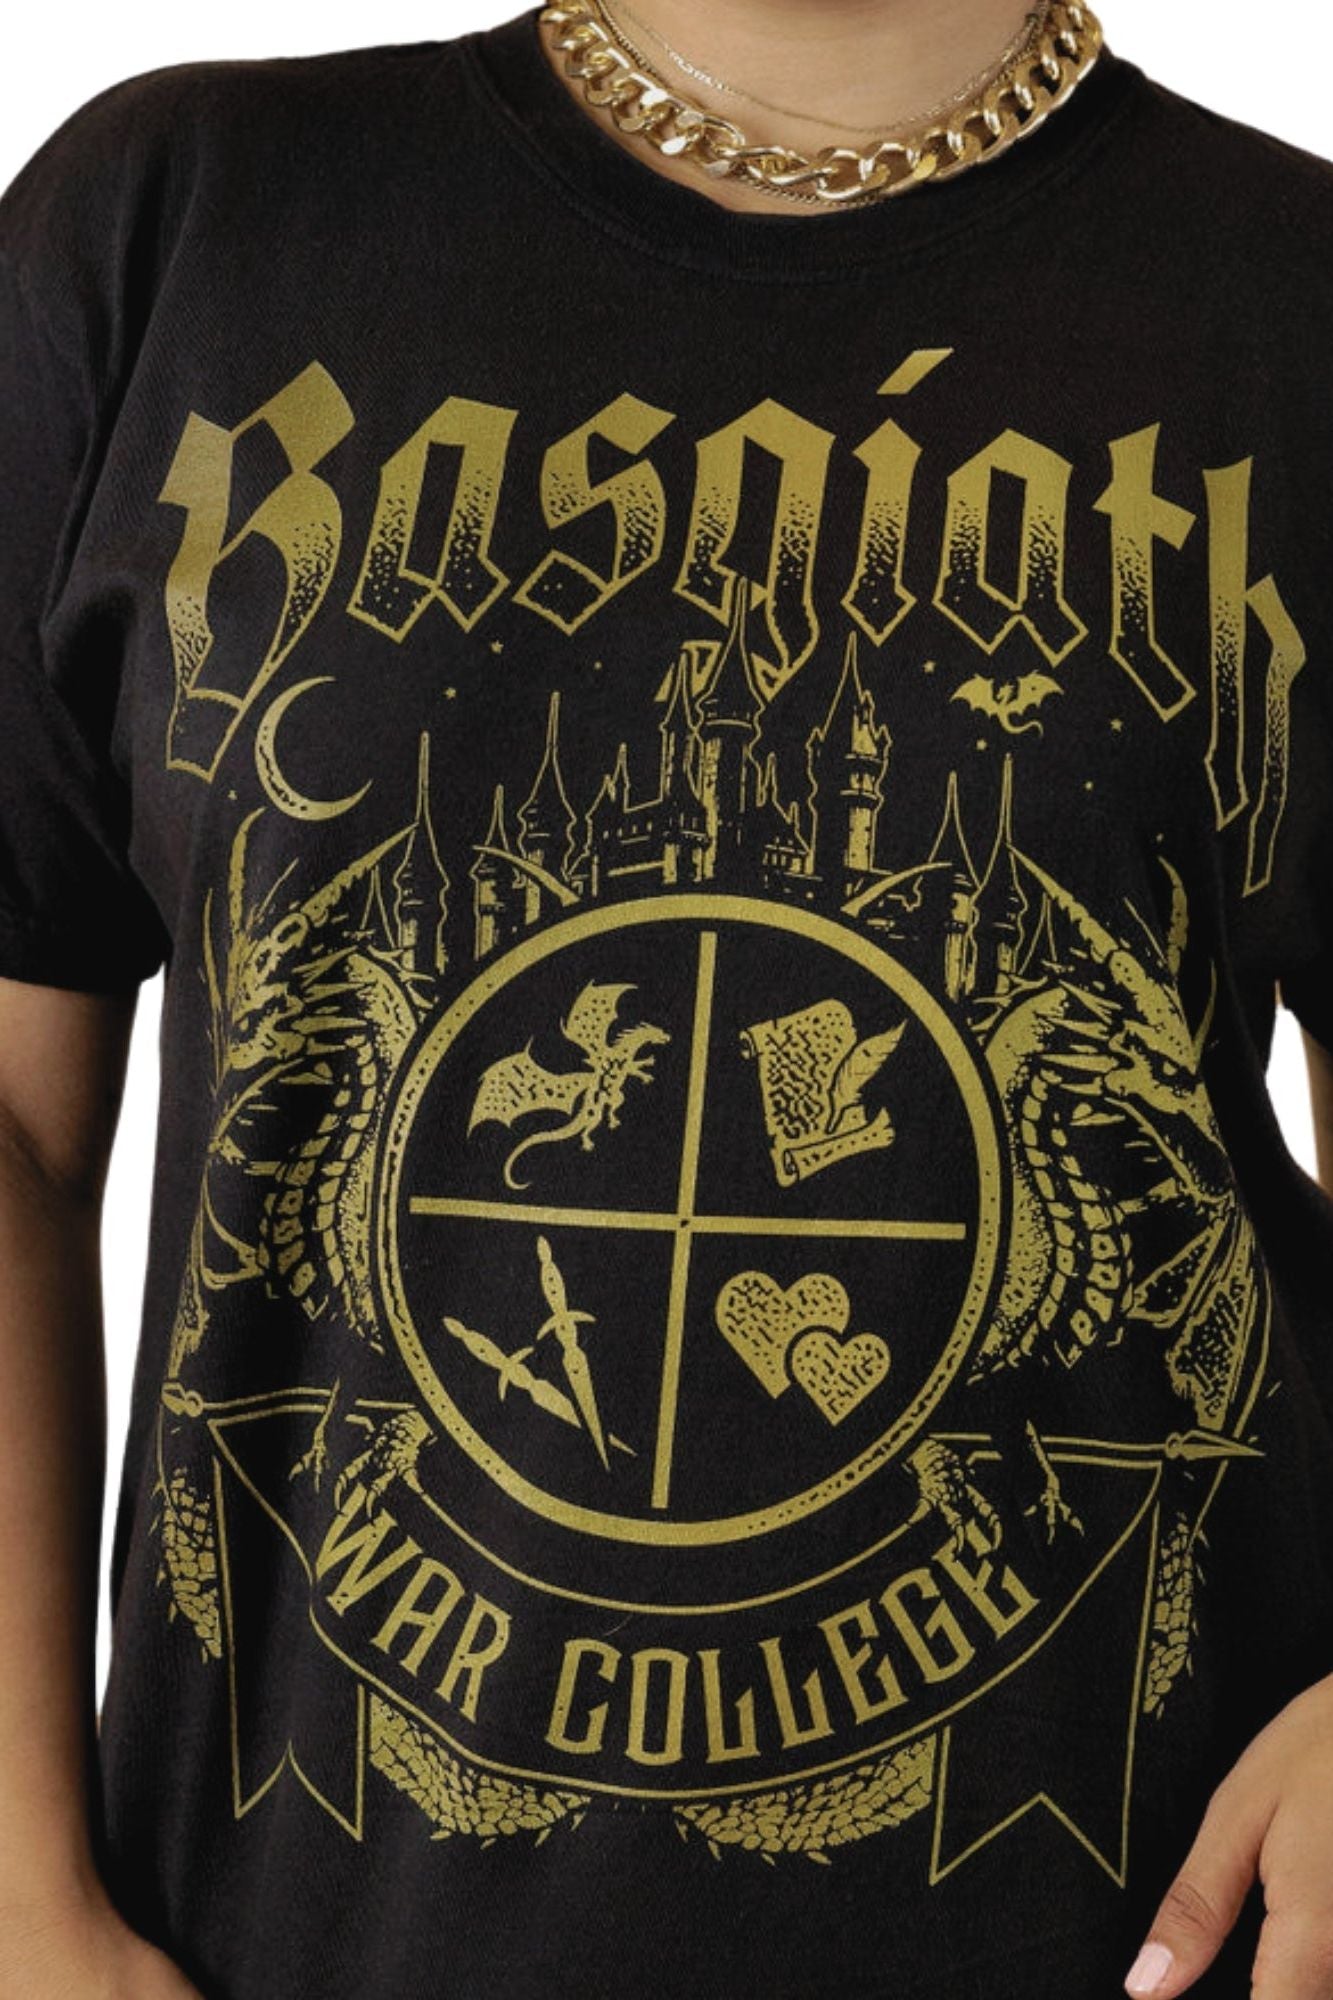 Basgiath War College T - Shirt - Caffeineandcurses - Rebecca Yarros